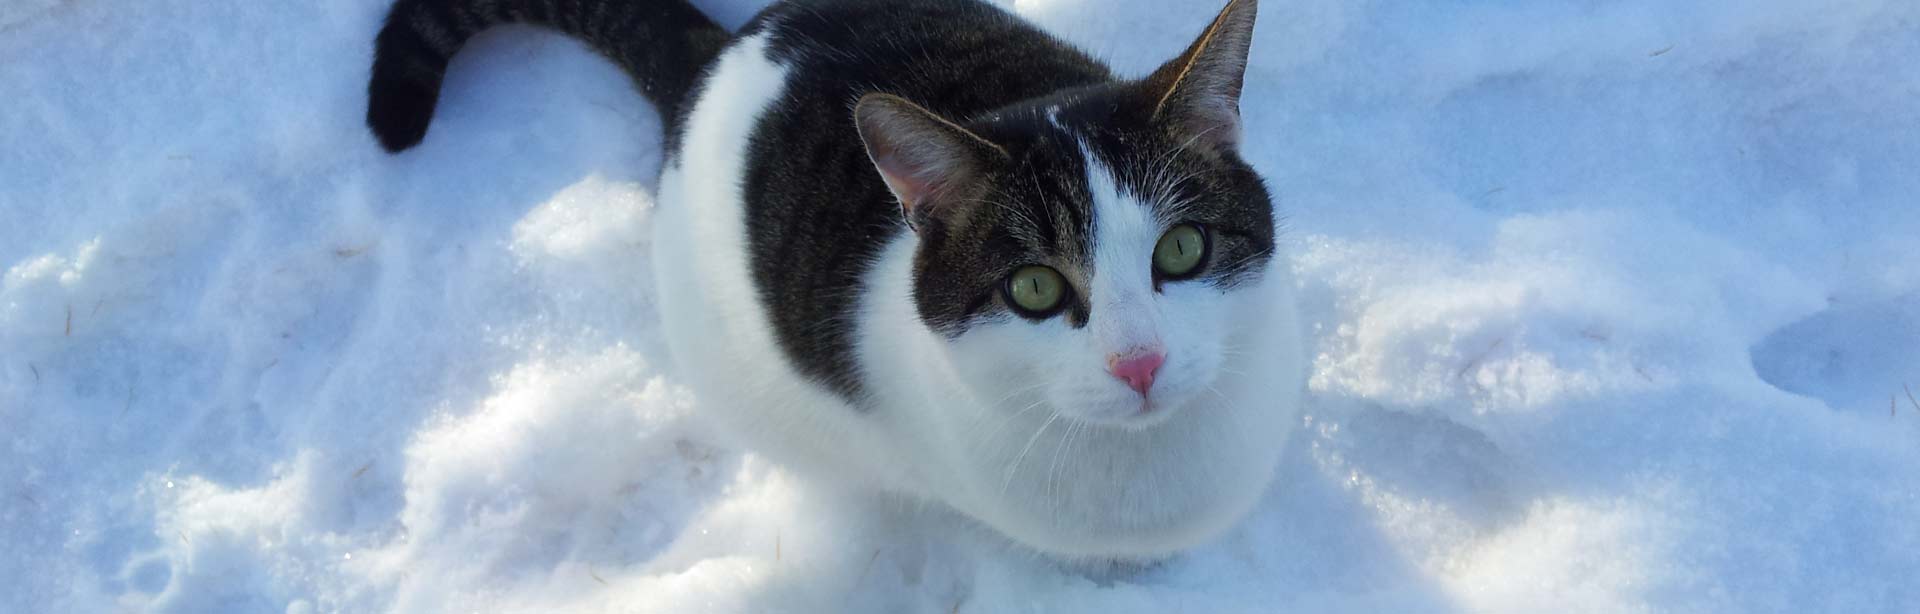 Bild Katze im Winter